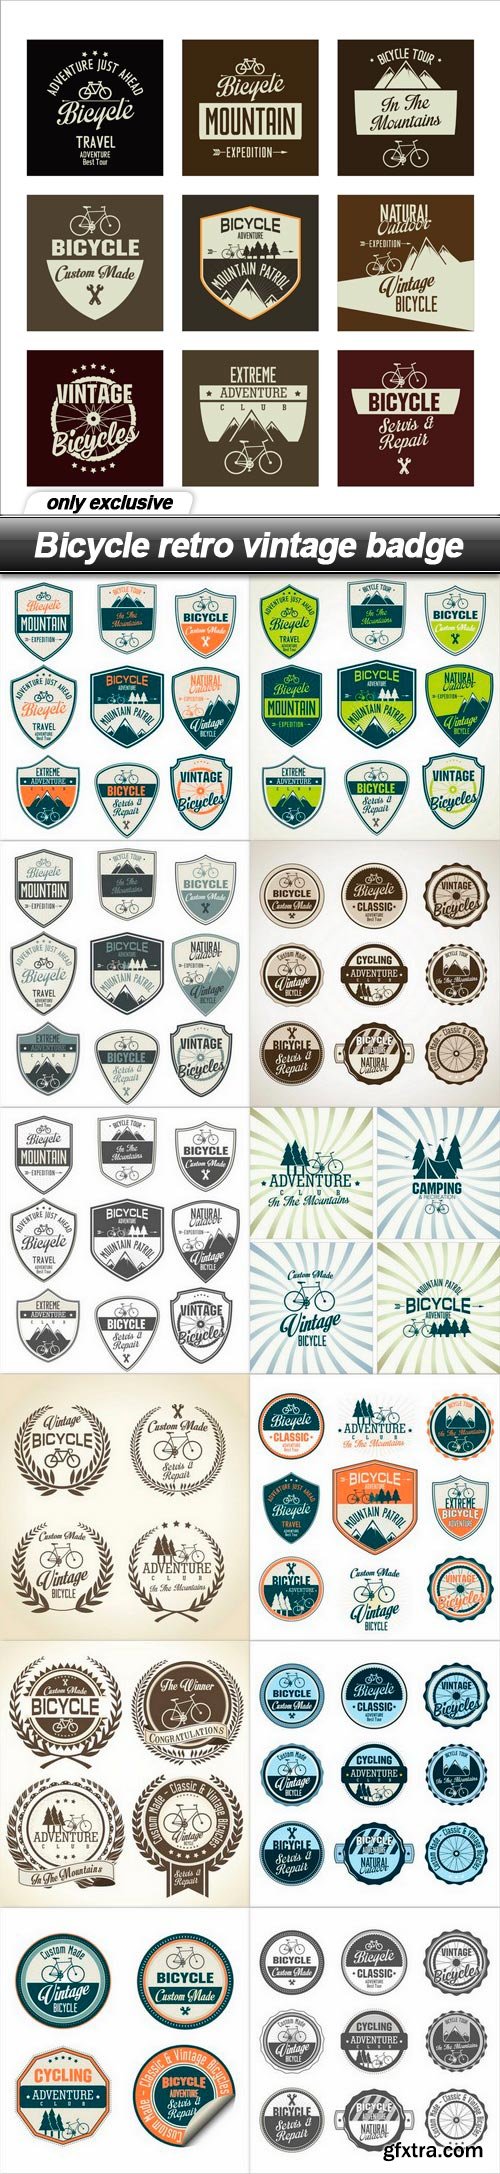 Bicycle retro vintage badge - 13 EPS